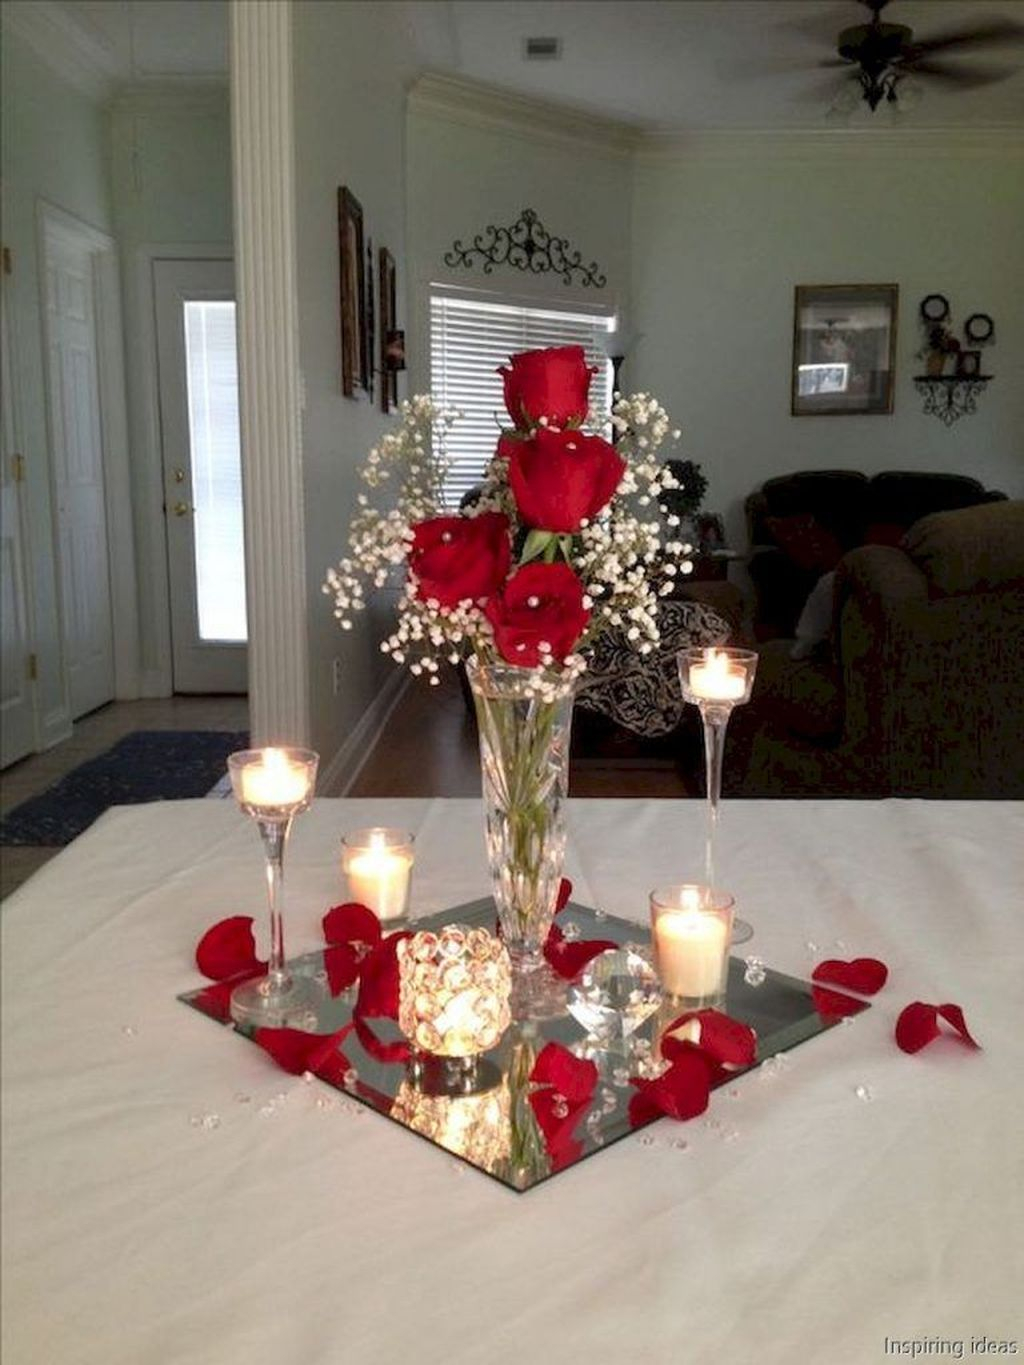 Inspiring Valentine Centerpieces Table Decorations04